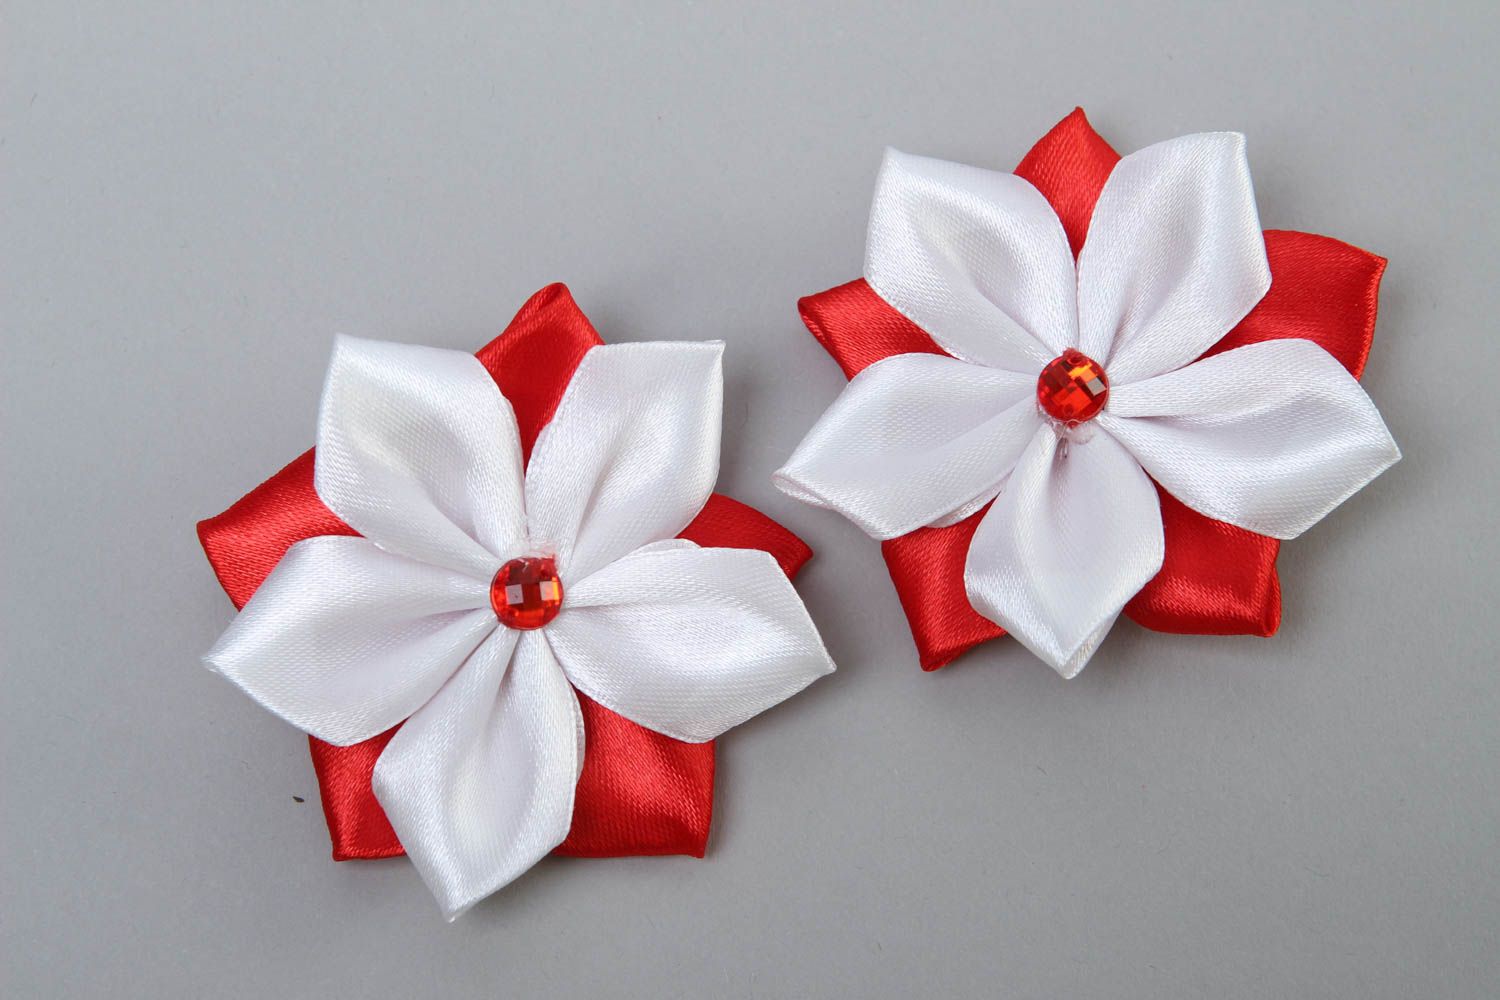 Handmade hair accessories kanzashi flowers hair clips gift ideas for women photo 2